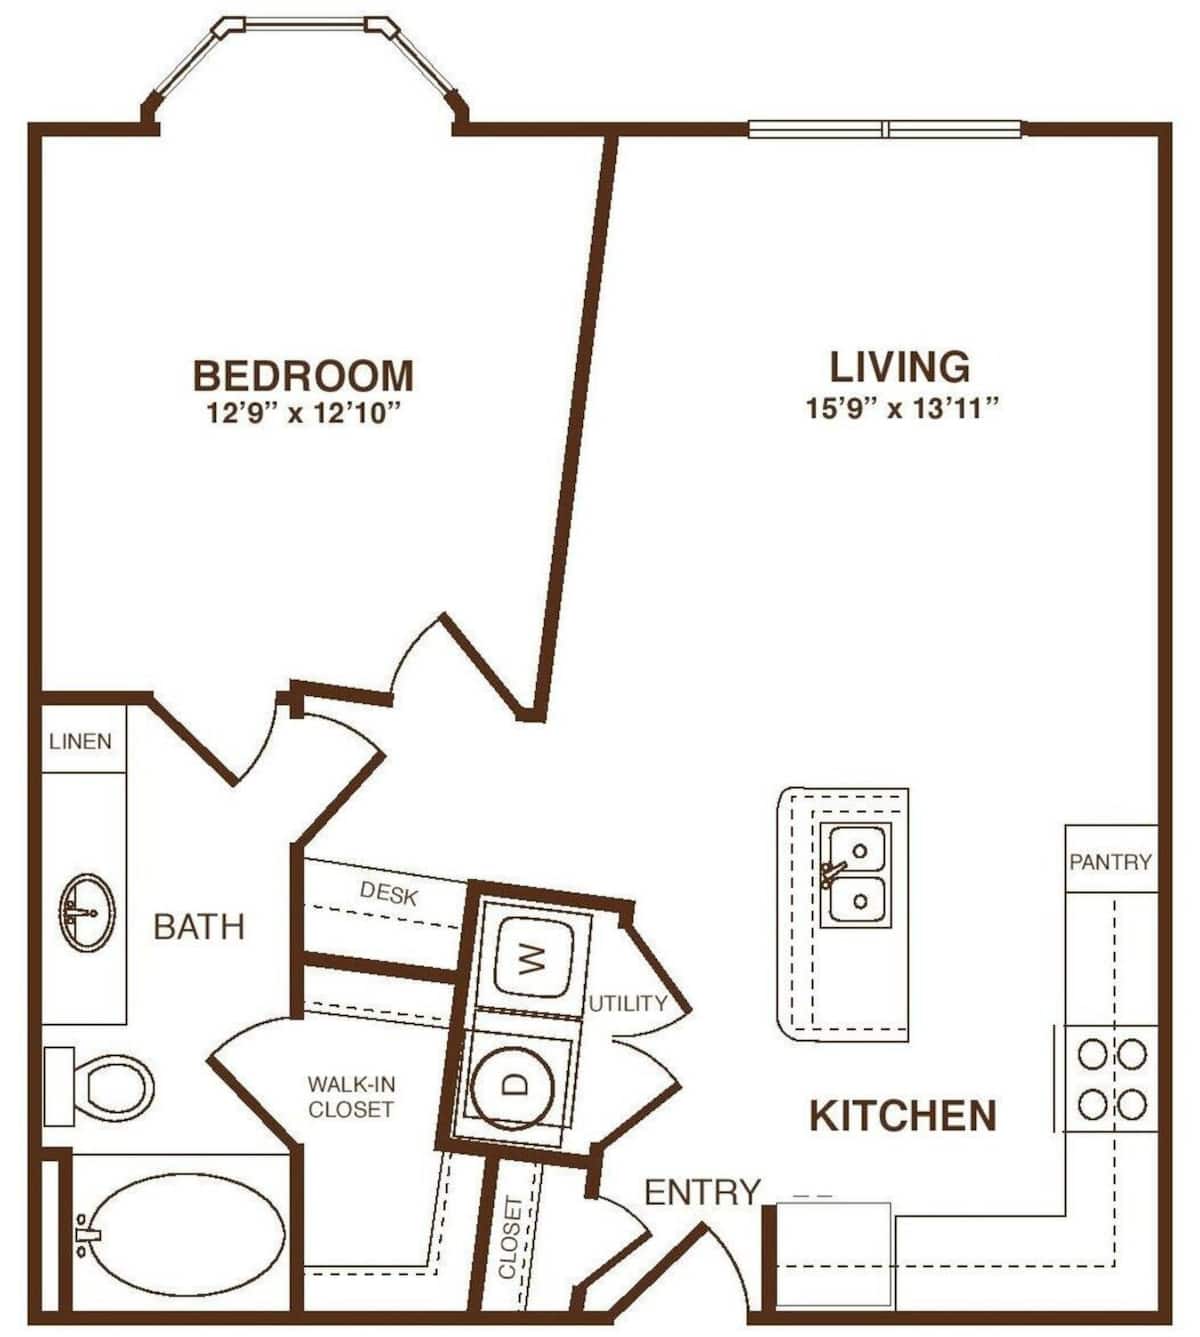 Floorplan diagram for The Meridian, showing 1 bedroom